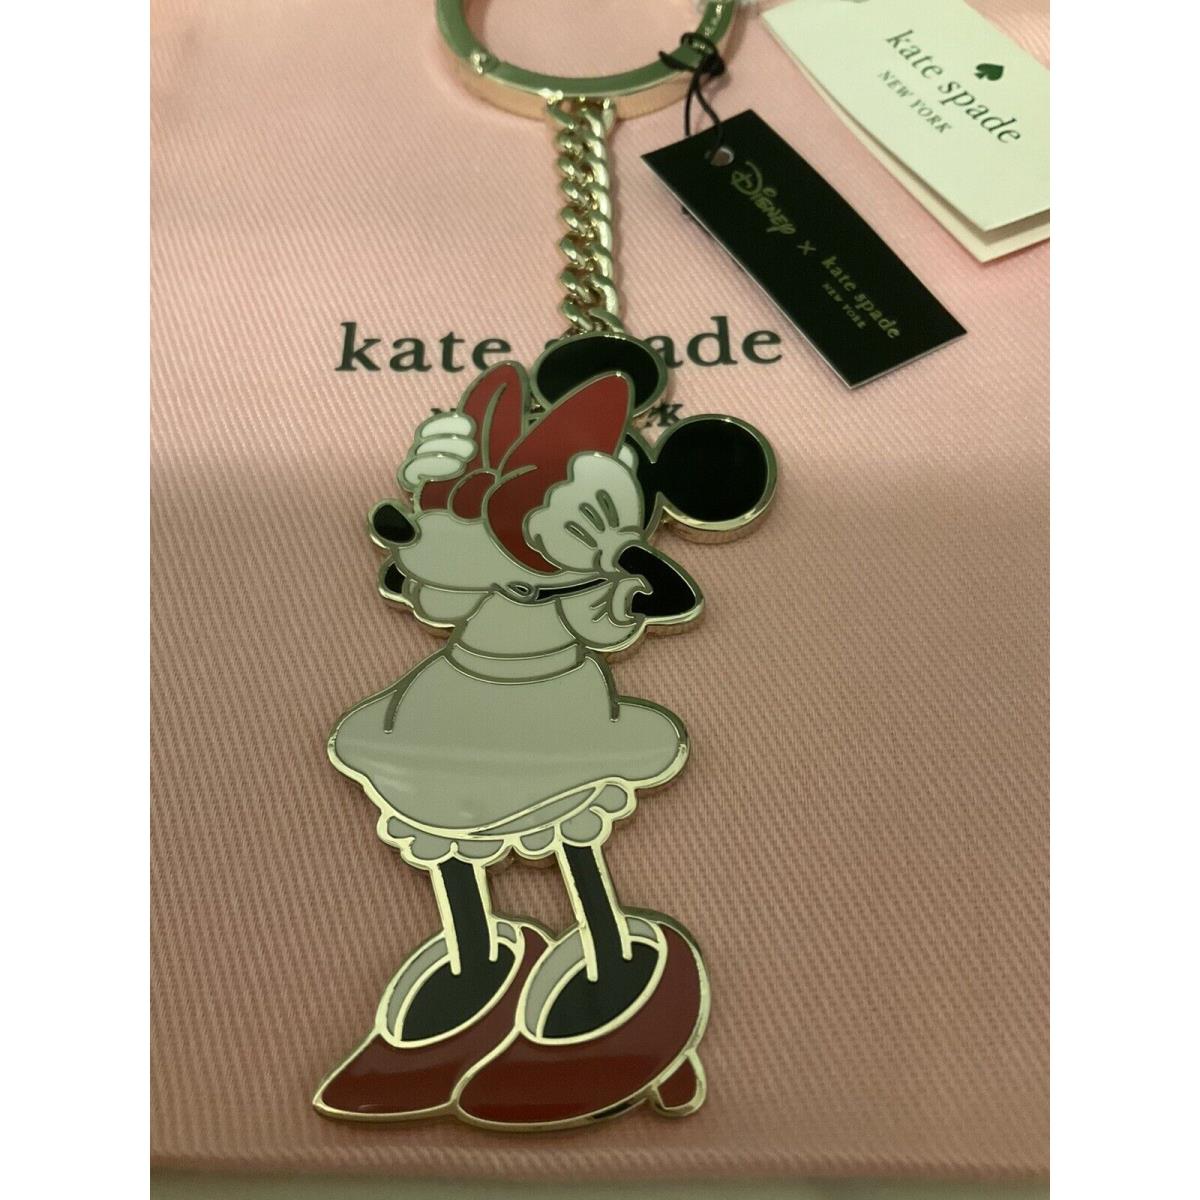 Kate Spade New York X Minnie Mouse Disney Bag Charm Keychain Chain Fob